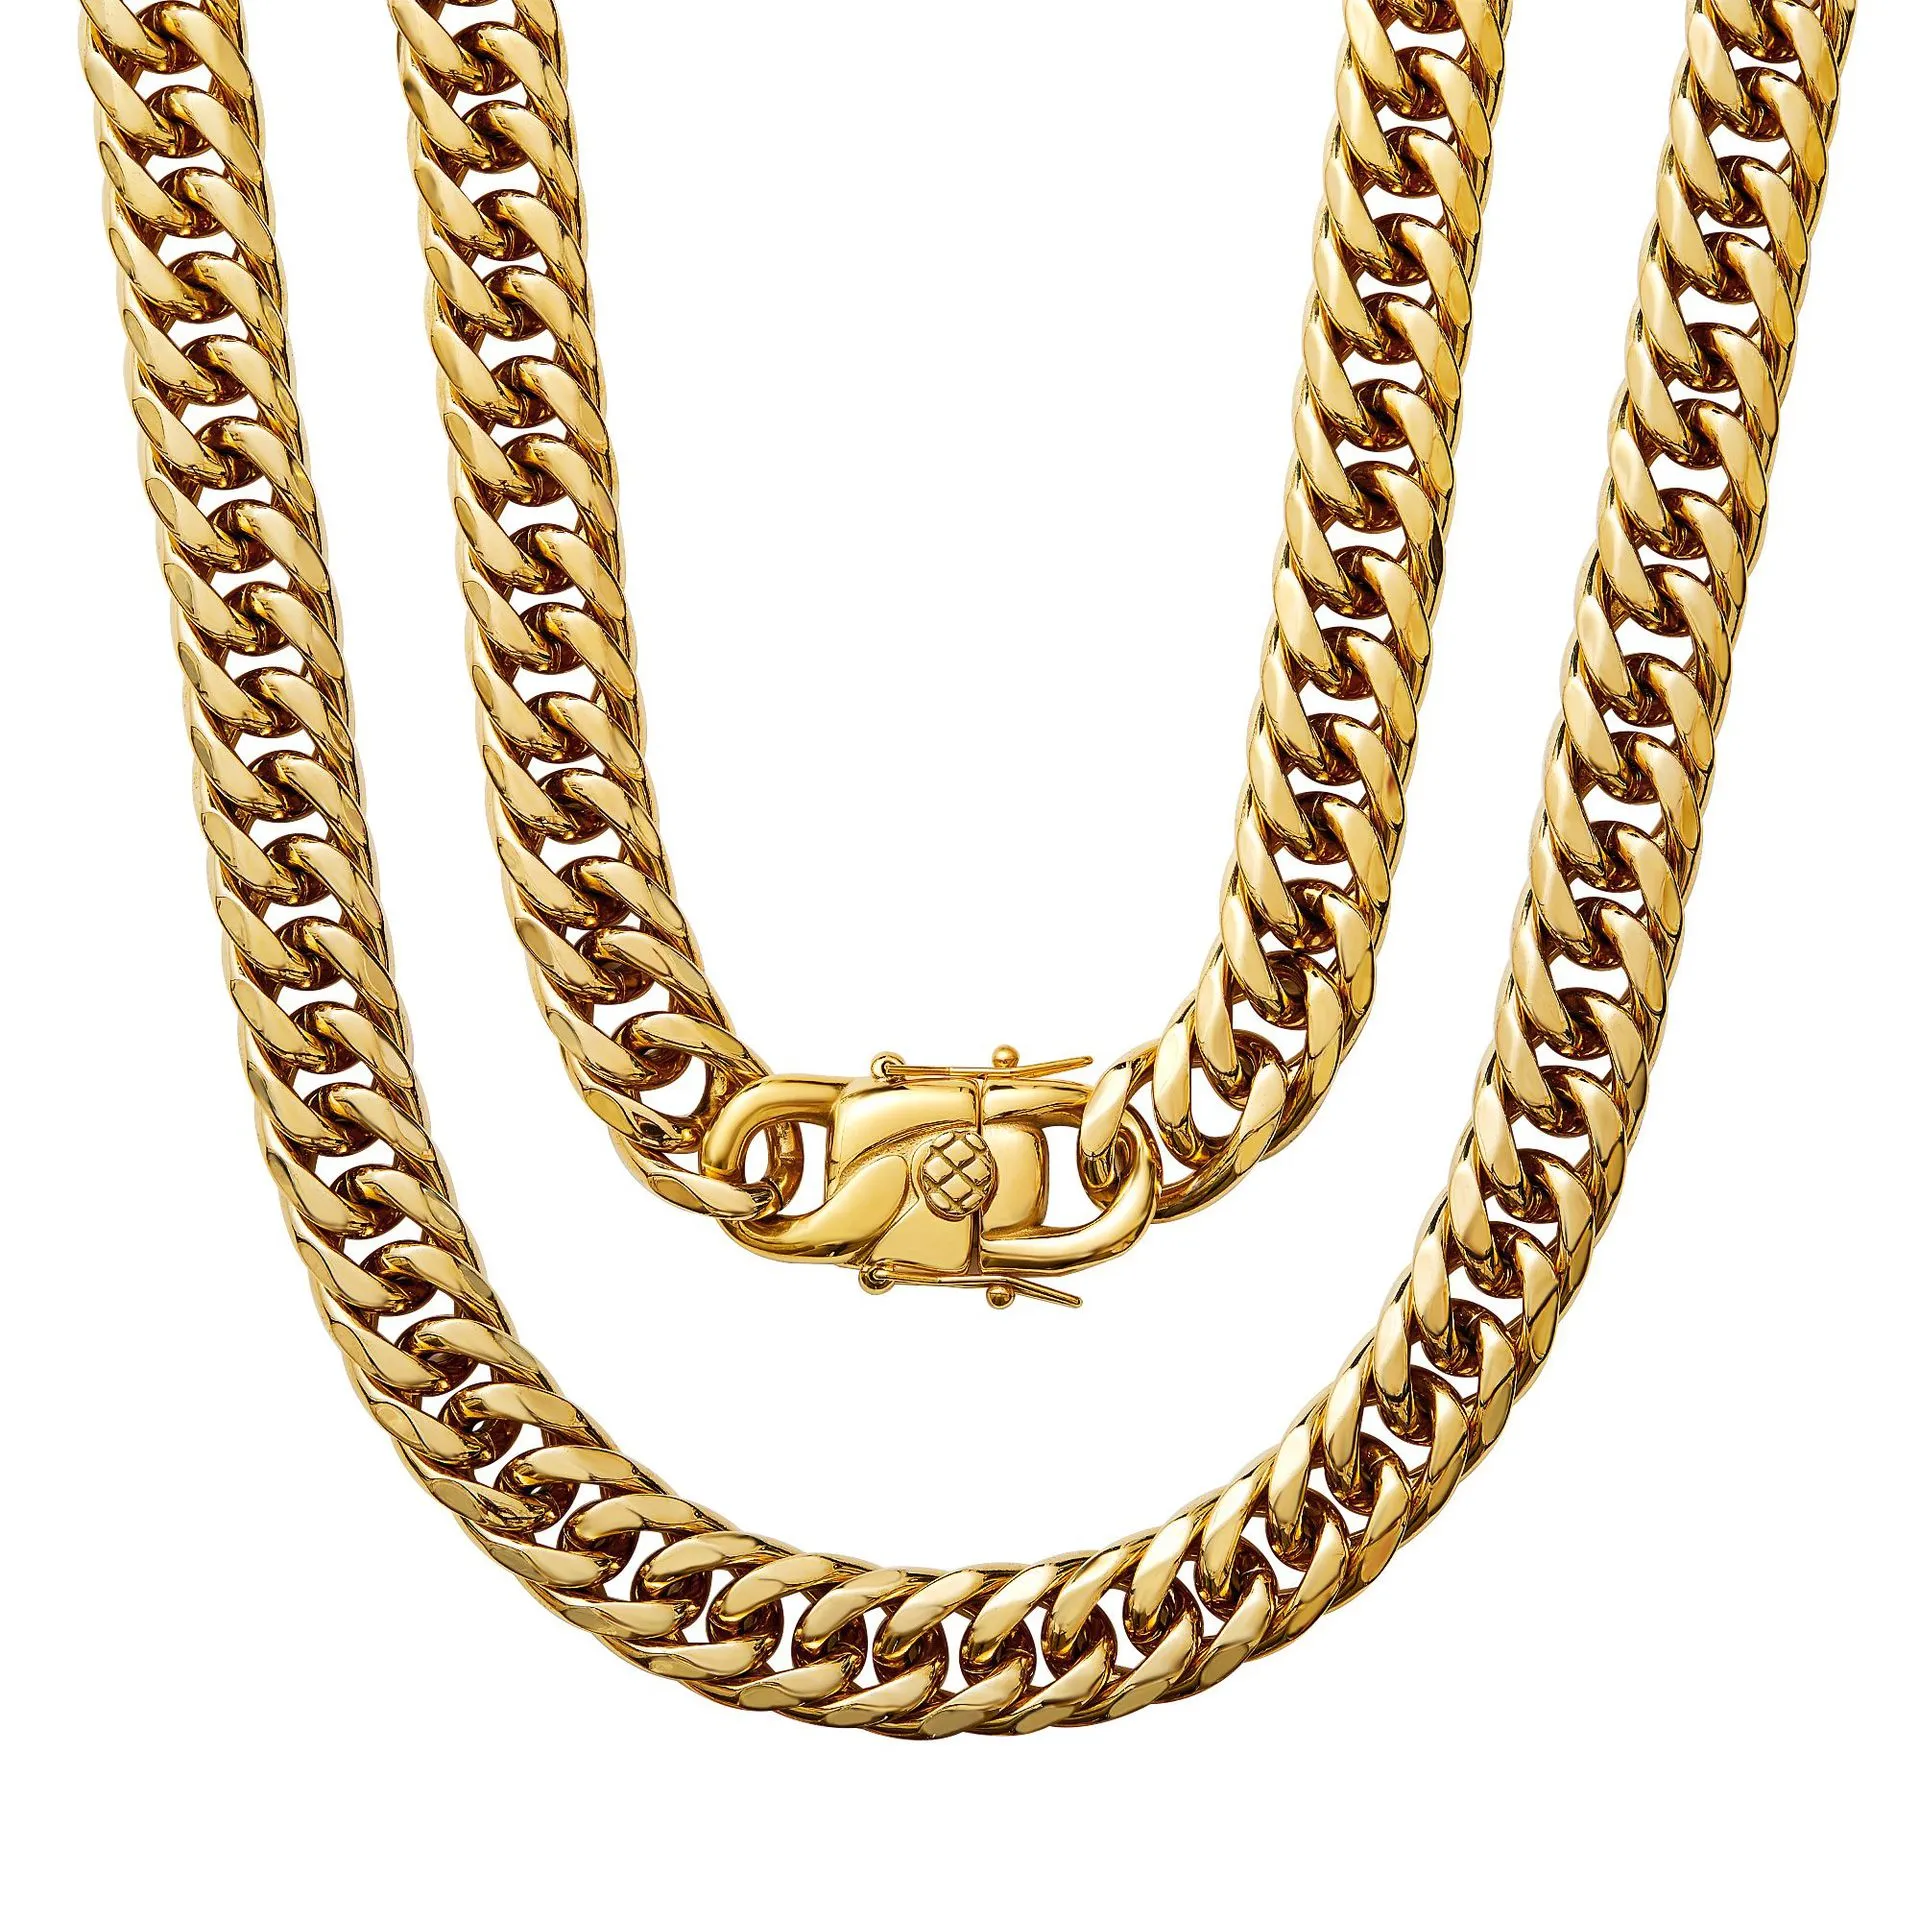 30 Zoll 11/13/16/21 mm Neue Herren-Halskette aus schwerem Gold, 14-Karat-Massivgoldfüllung, dicke kubanische Kette, kubanische verschlüsselte grobe Kette